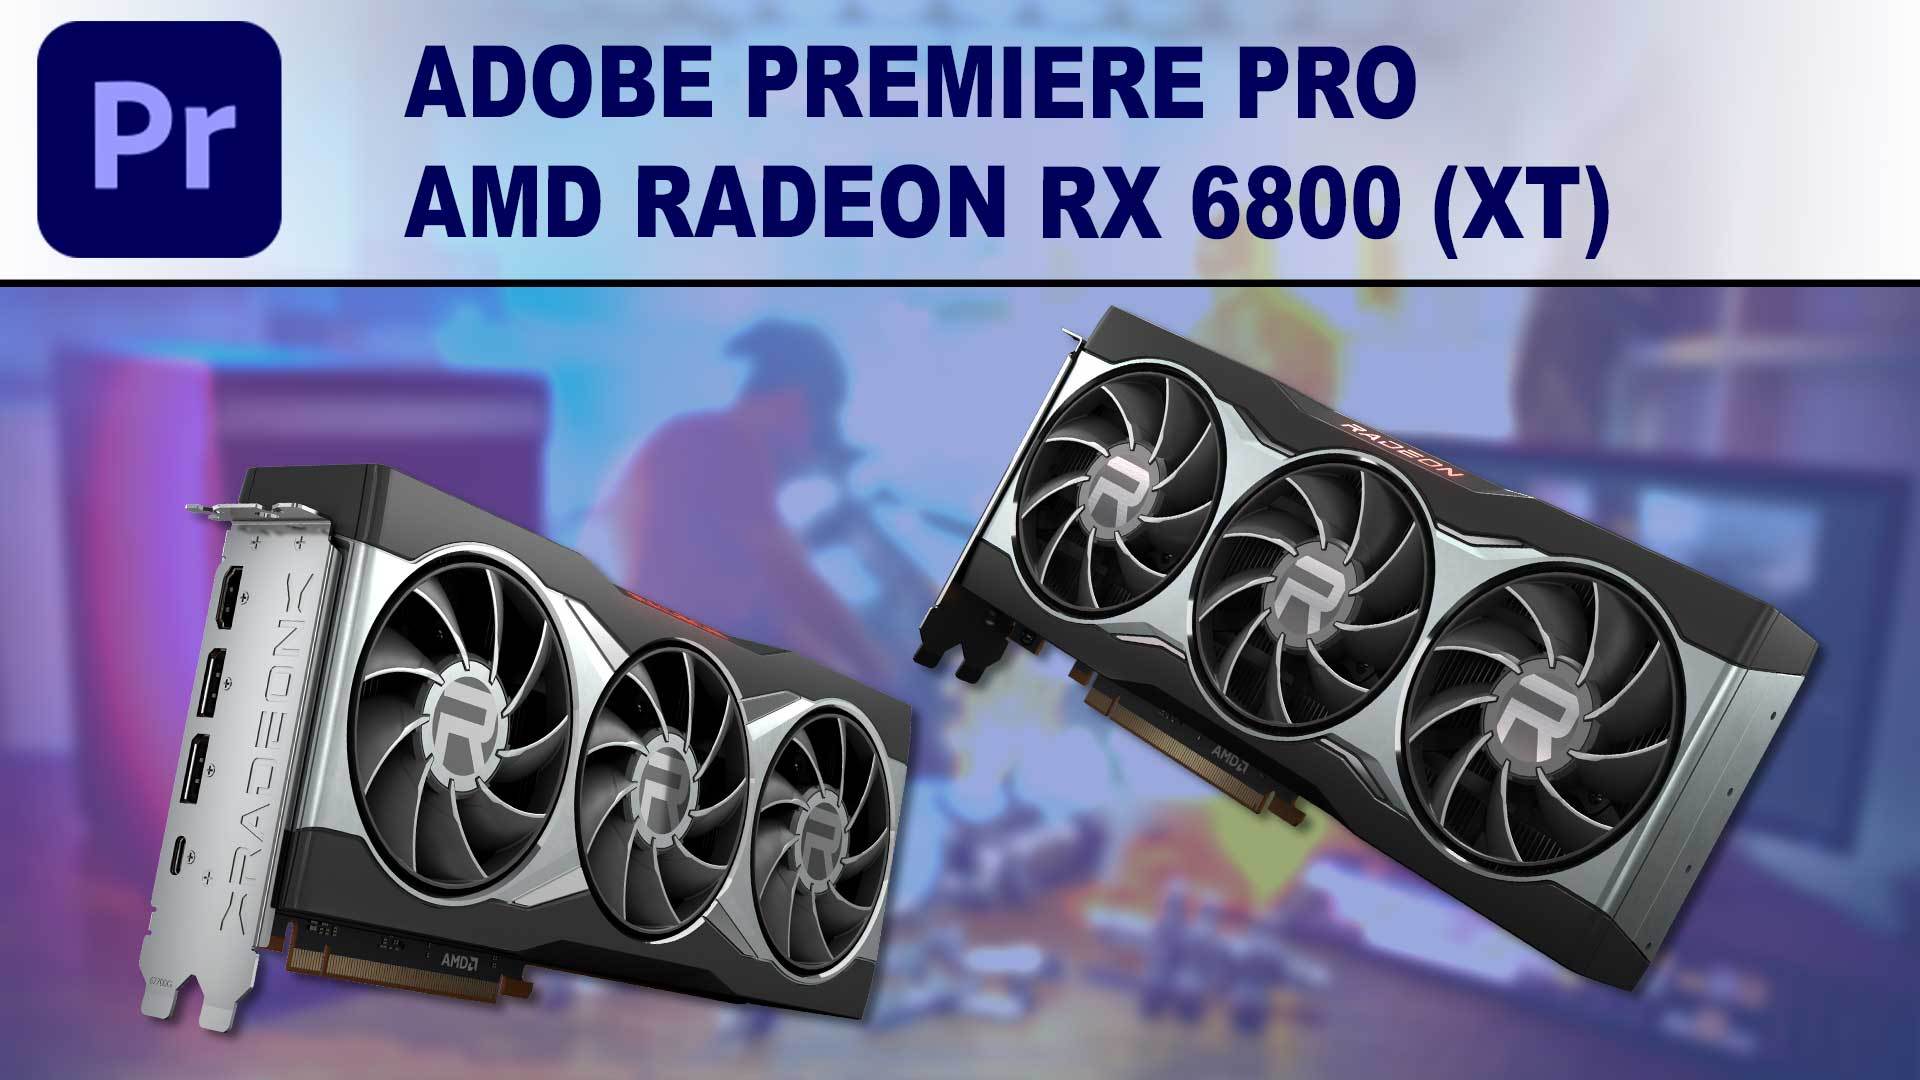 AMD RX 6800-XT vs Nvidia RTX 3070: Full Comparison With Specs